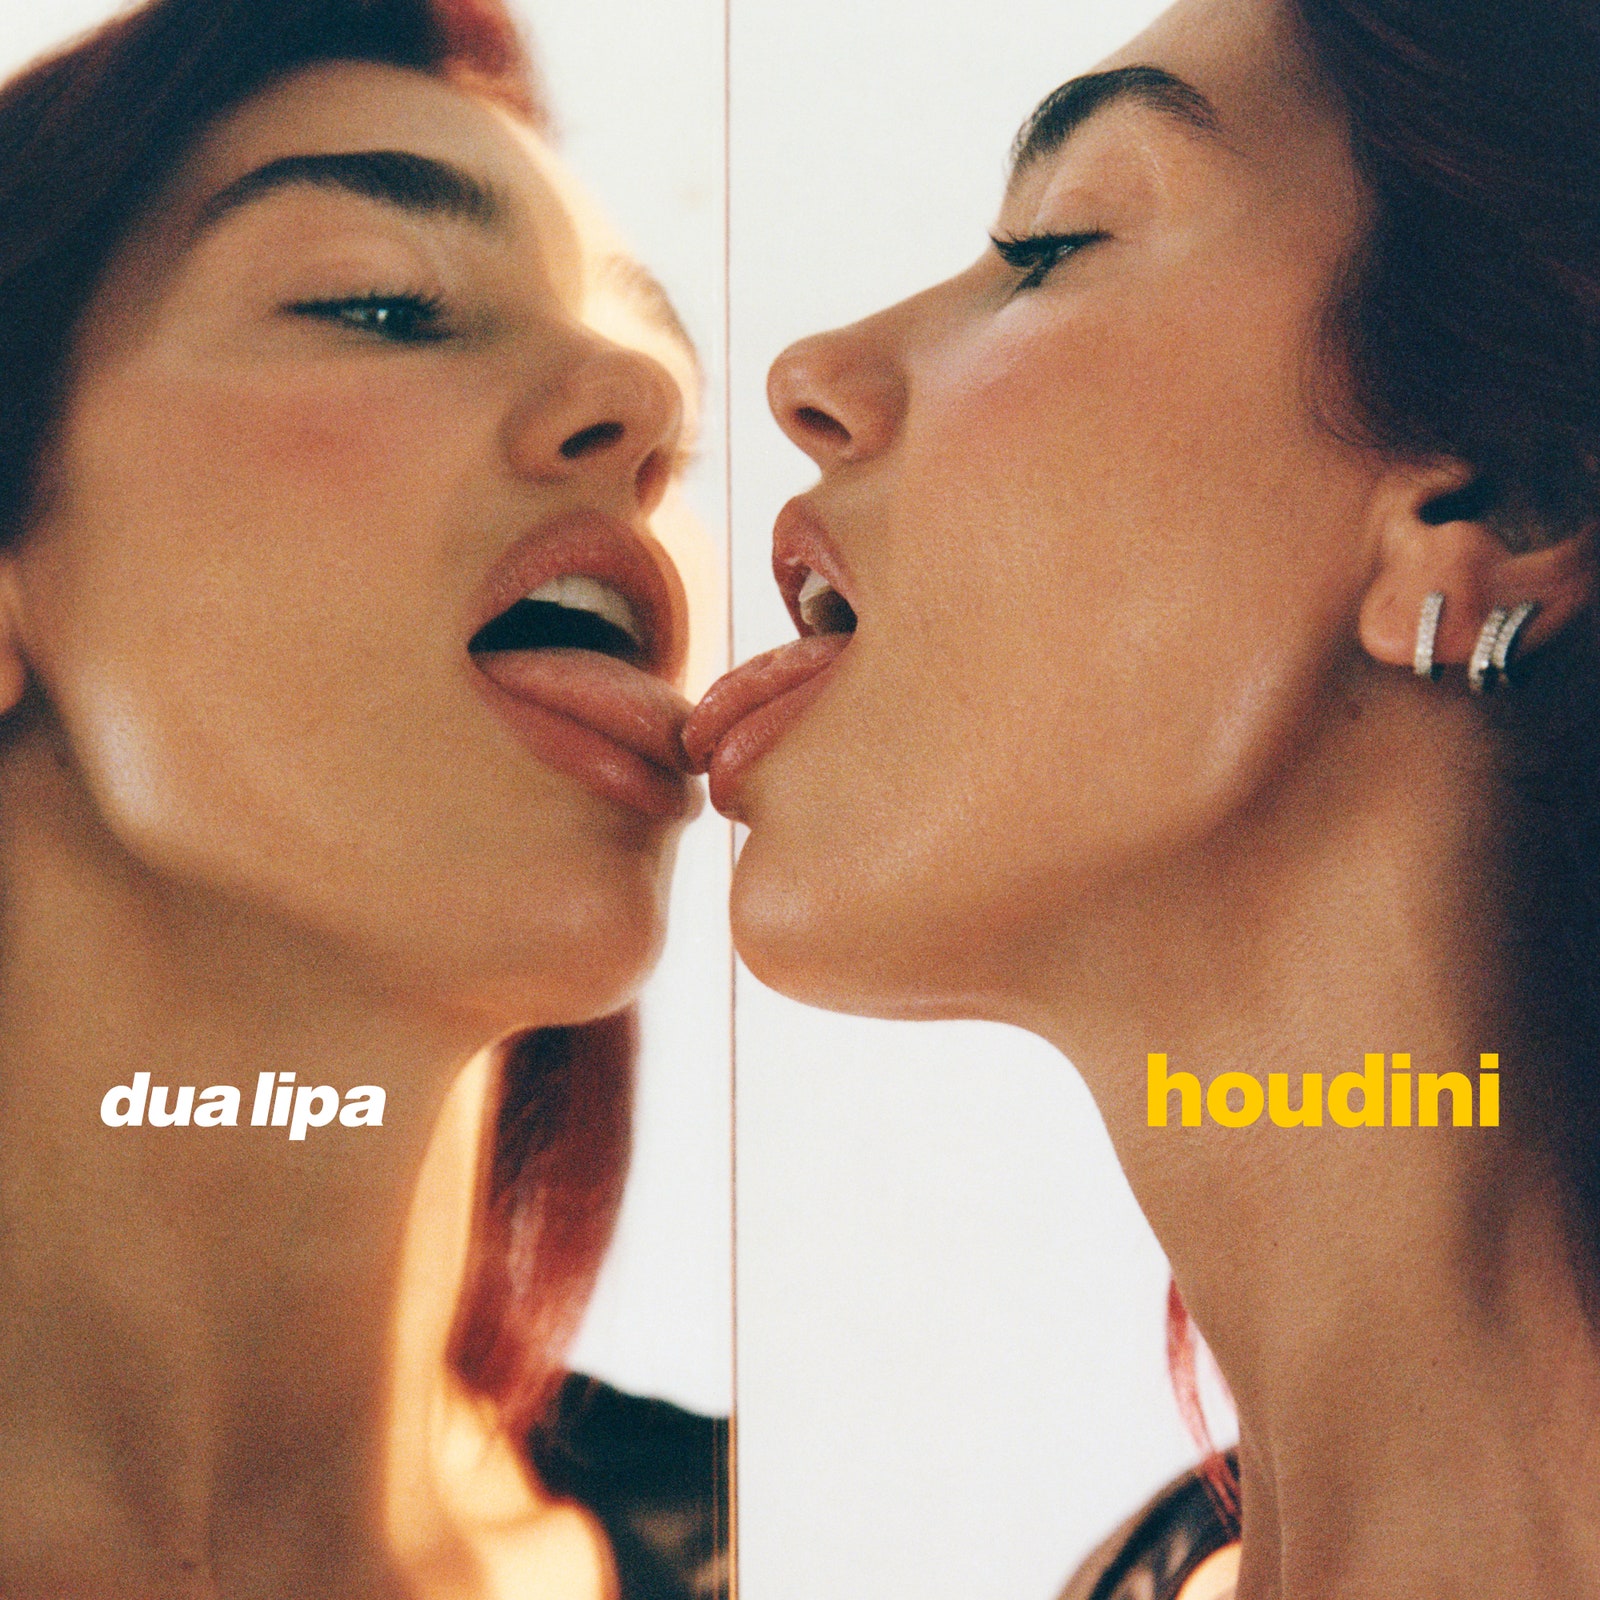 Dua Lipa Delivers the Magic on “Houdini”